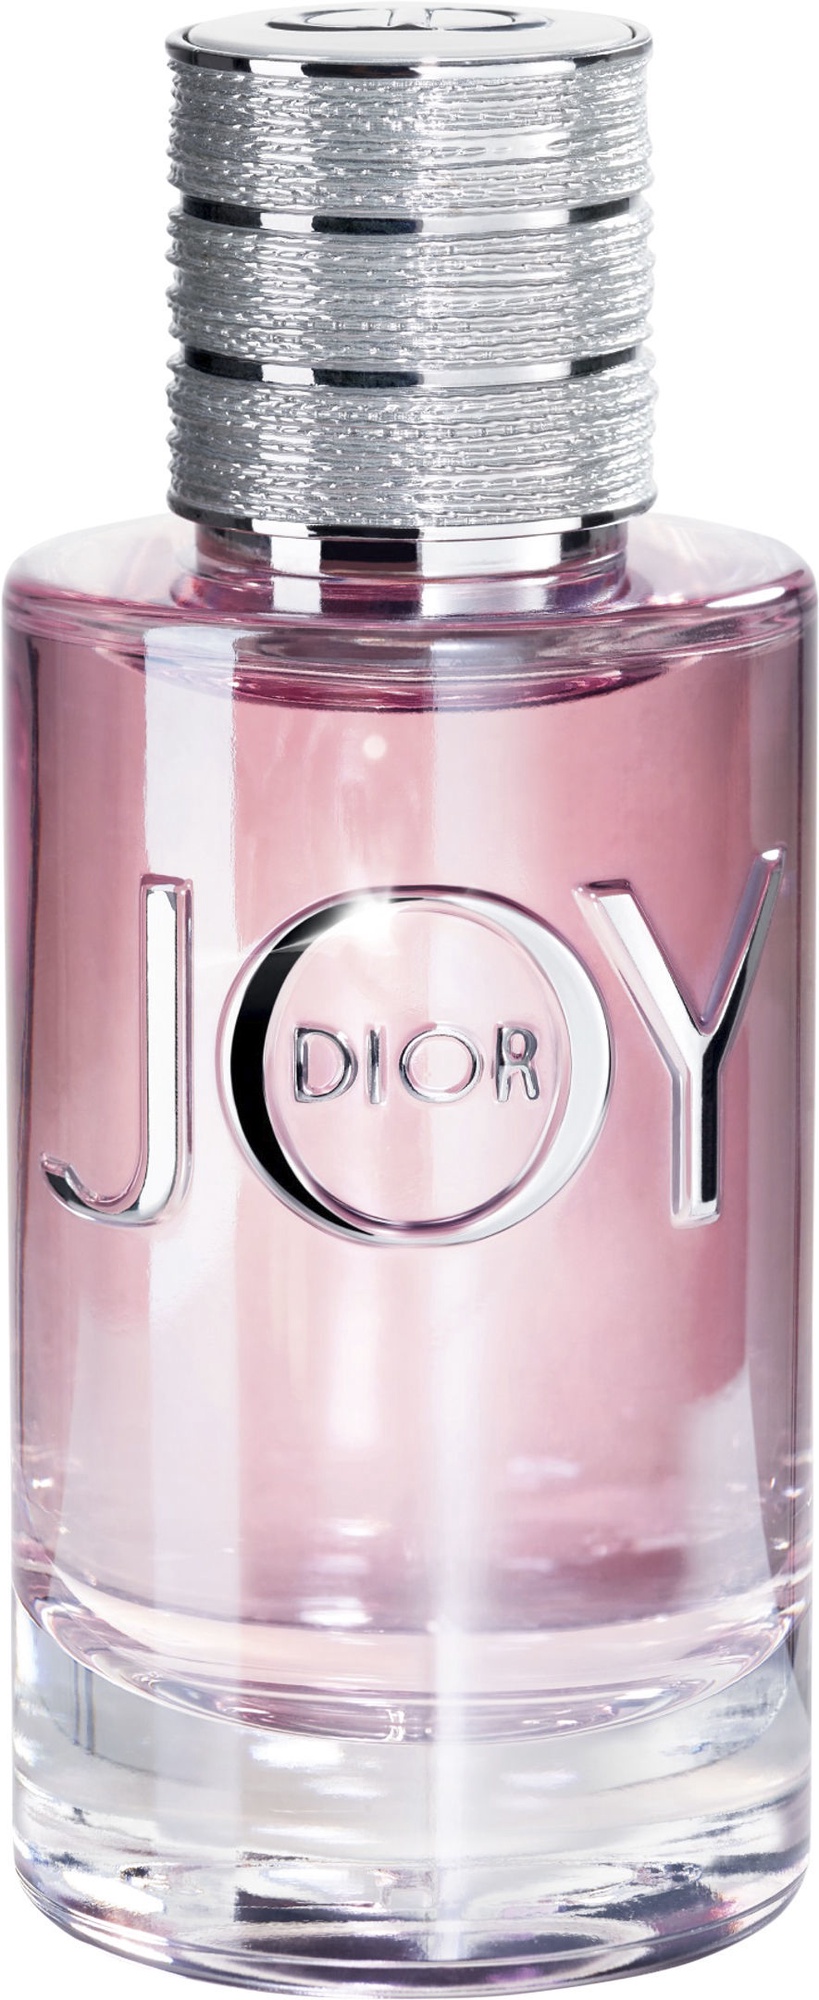 dior in joy 50ml